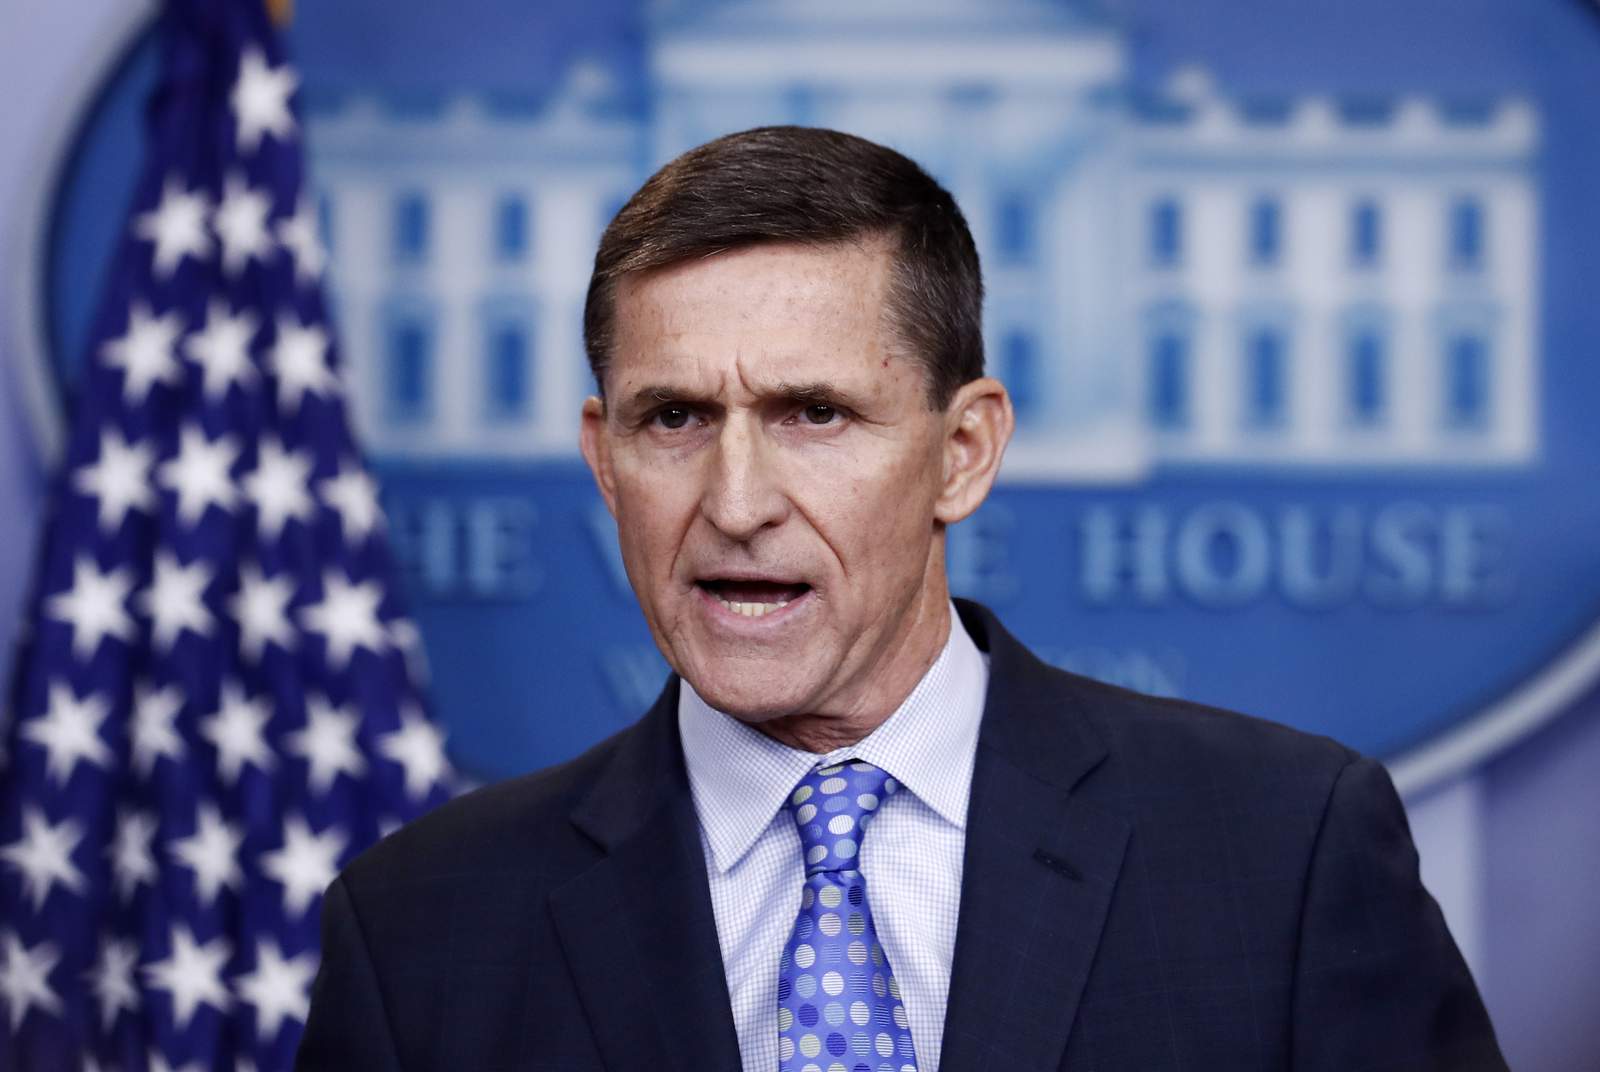 President Trump pardons Flynn, taking direct aim at Russia probe